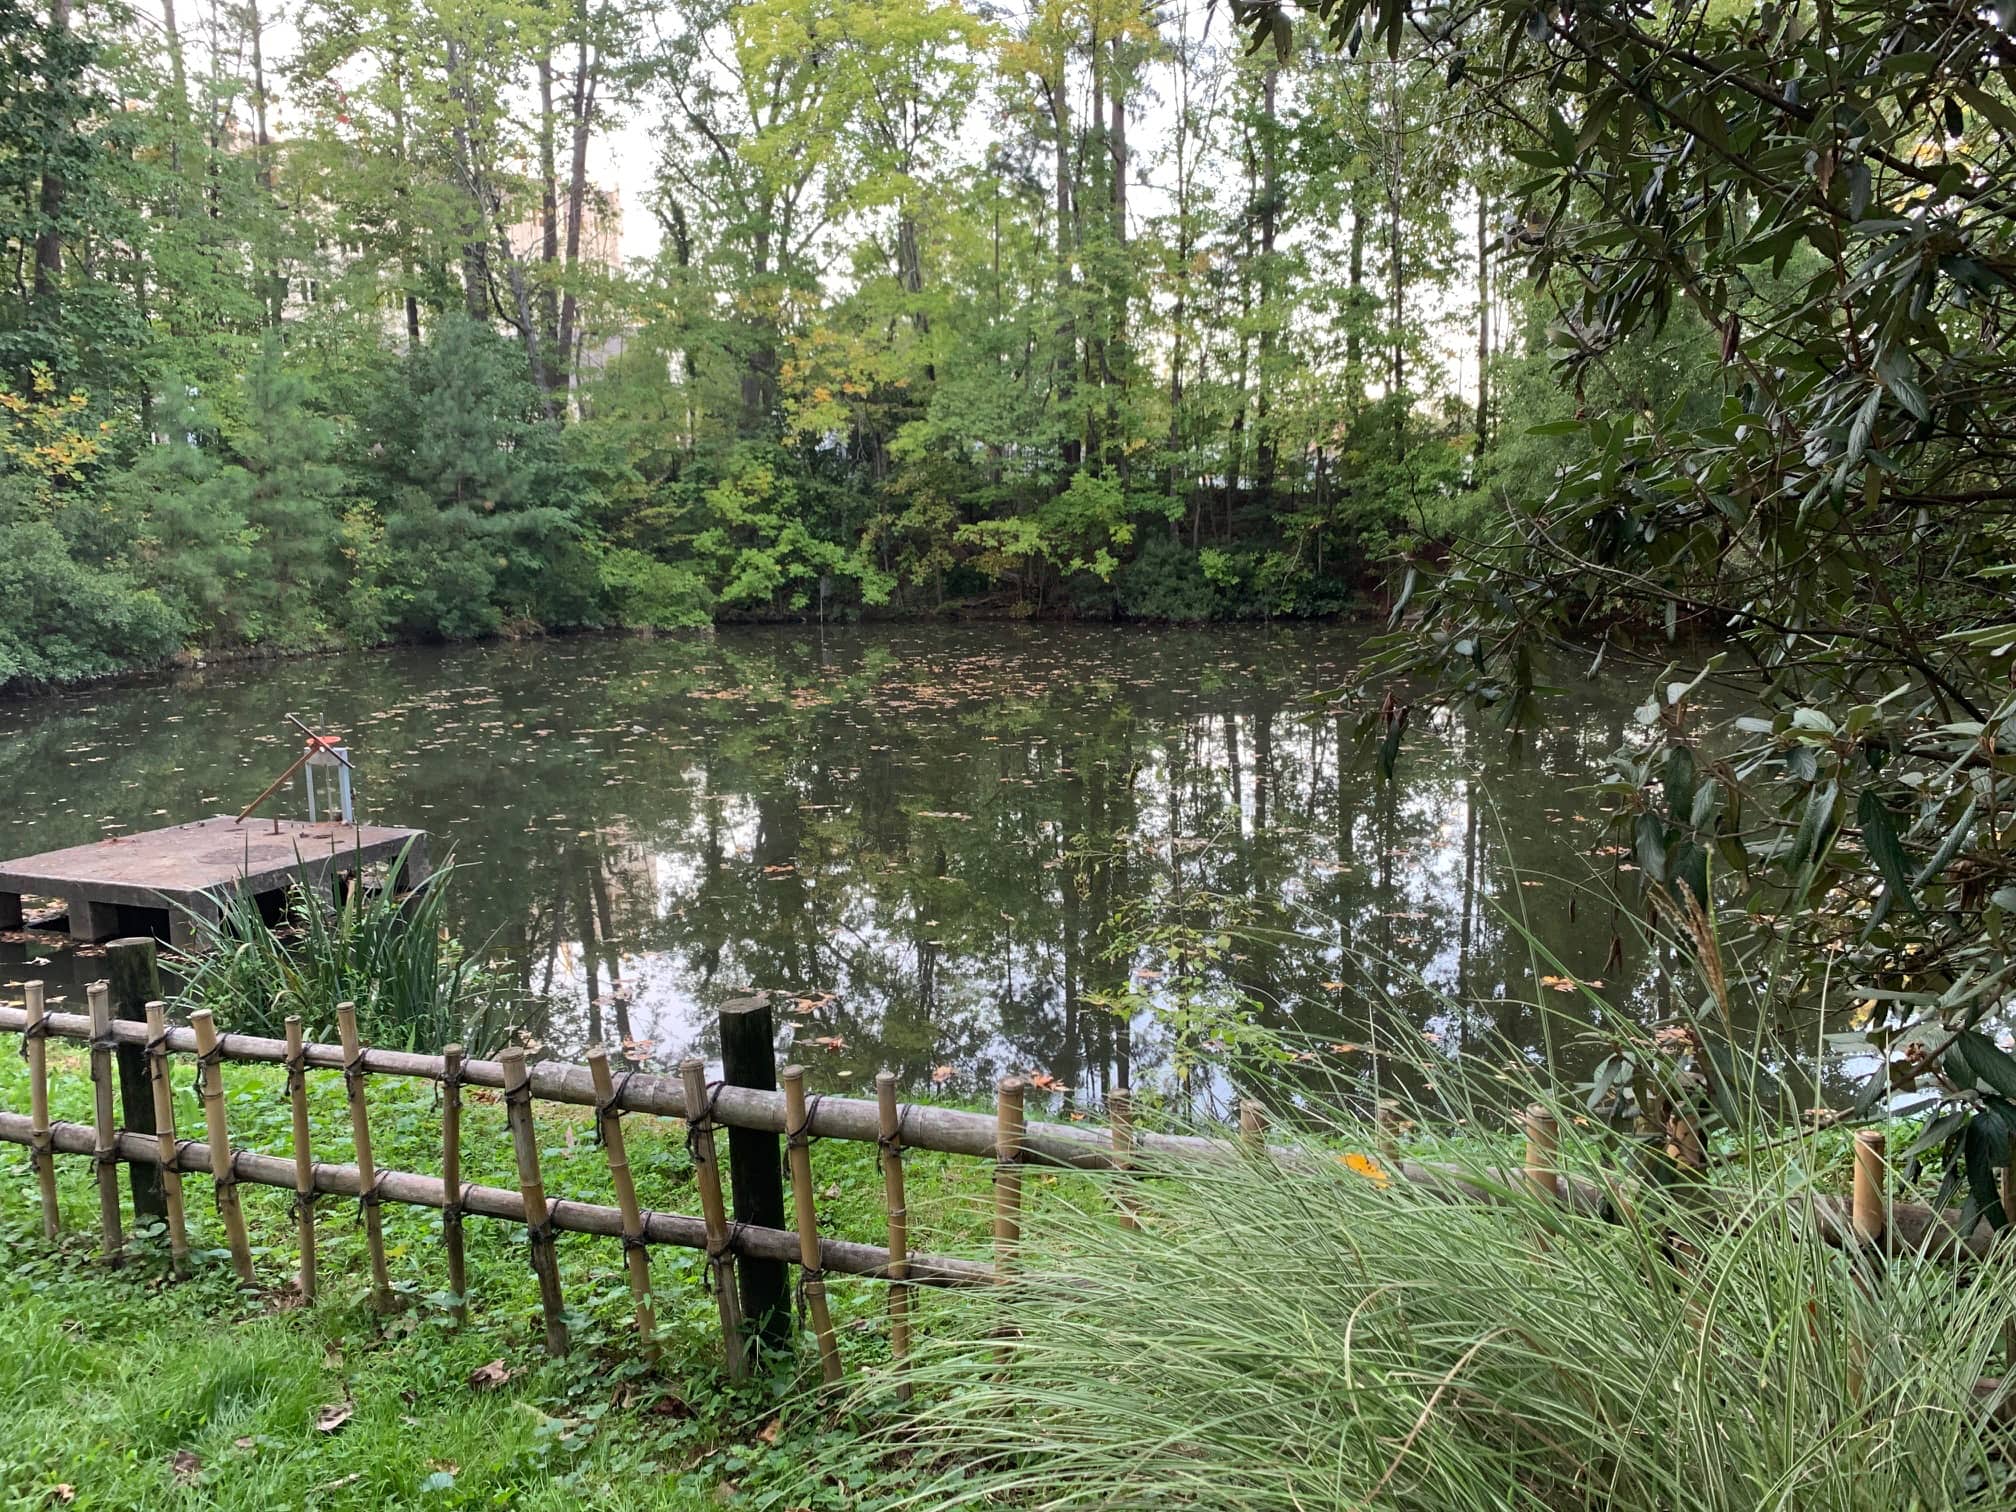 Asiatic Pond at Duke Gardens